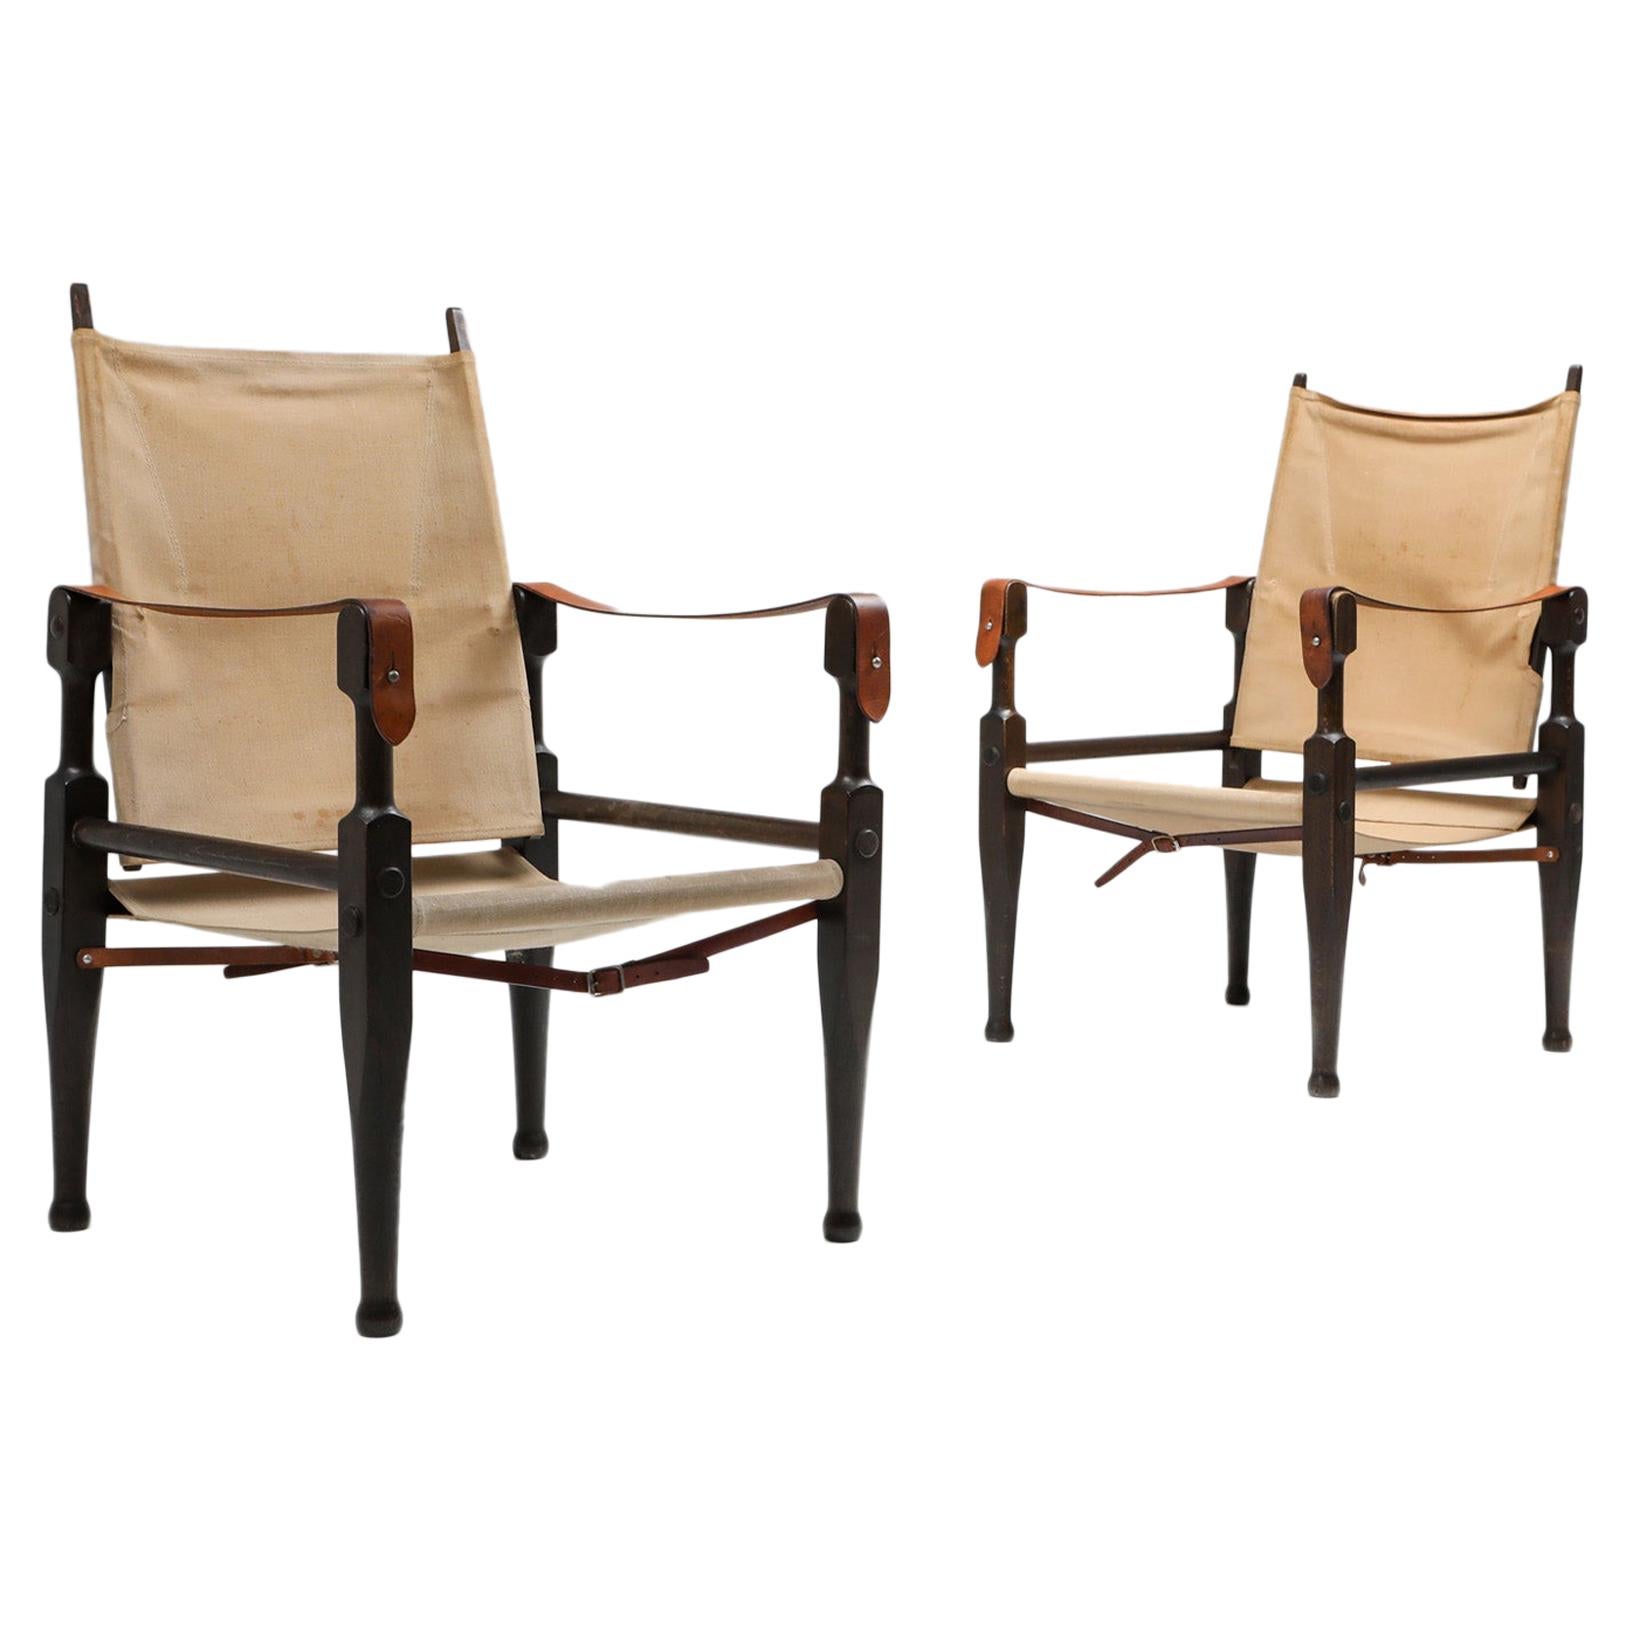 Safari Chairs Designed by Kaare Klint for Rud Rasmussen, Denmark, 1960s